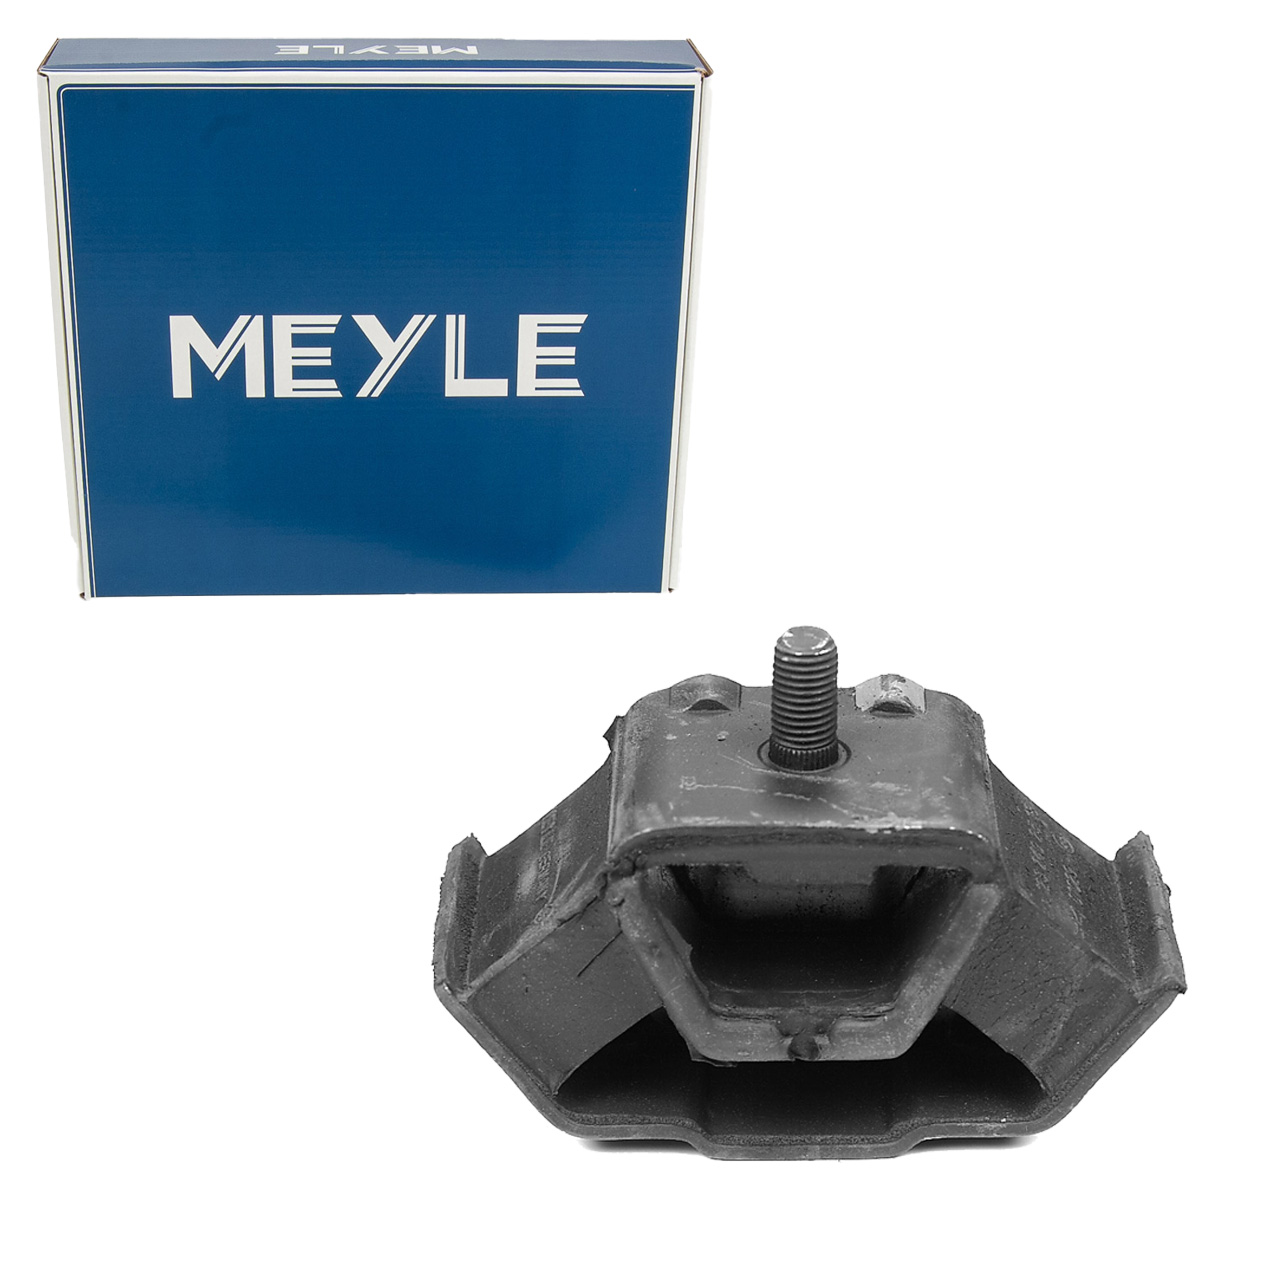 MEYLE Getriebelager Automatikgetriebe MERCEDES-BENZ W114 W115 W123 W126 hinten